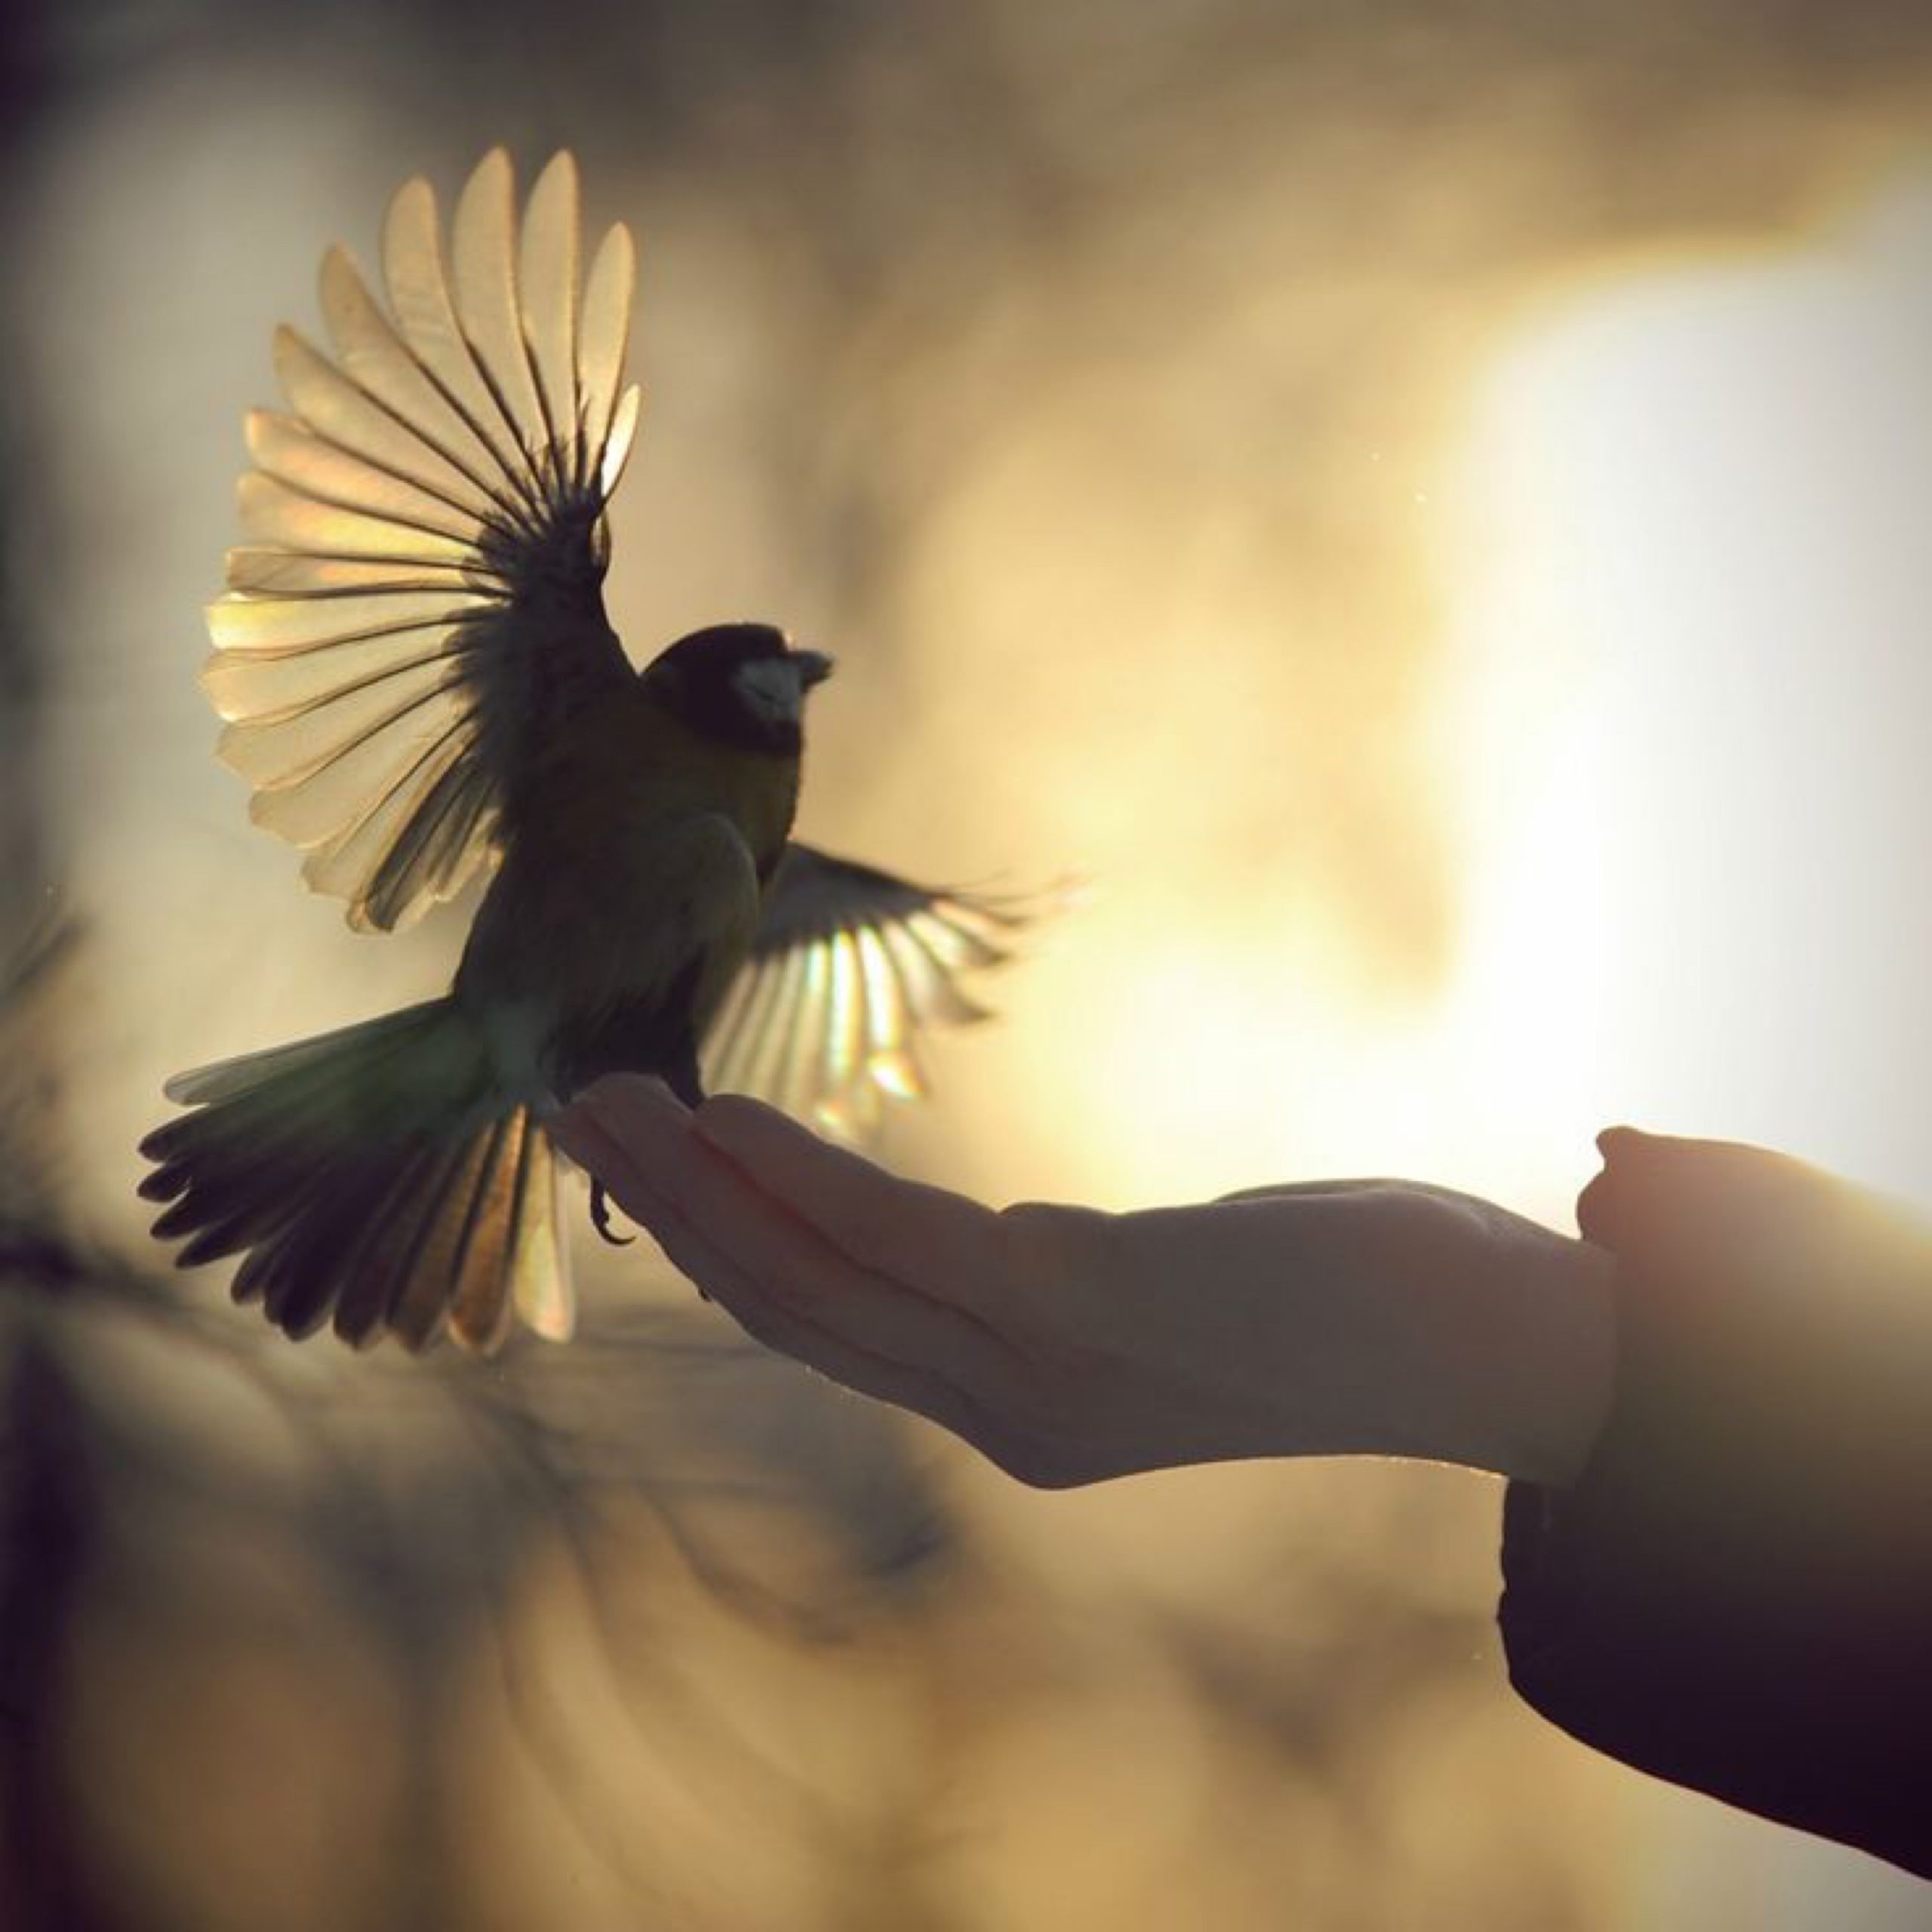 Живи чувствуй. Твори добро. Птица на руке. Творить добро. Птица свободы.